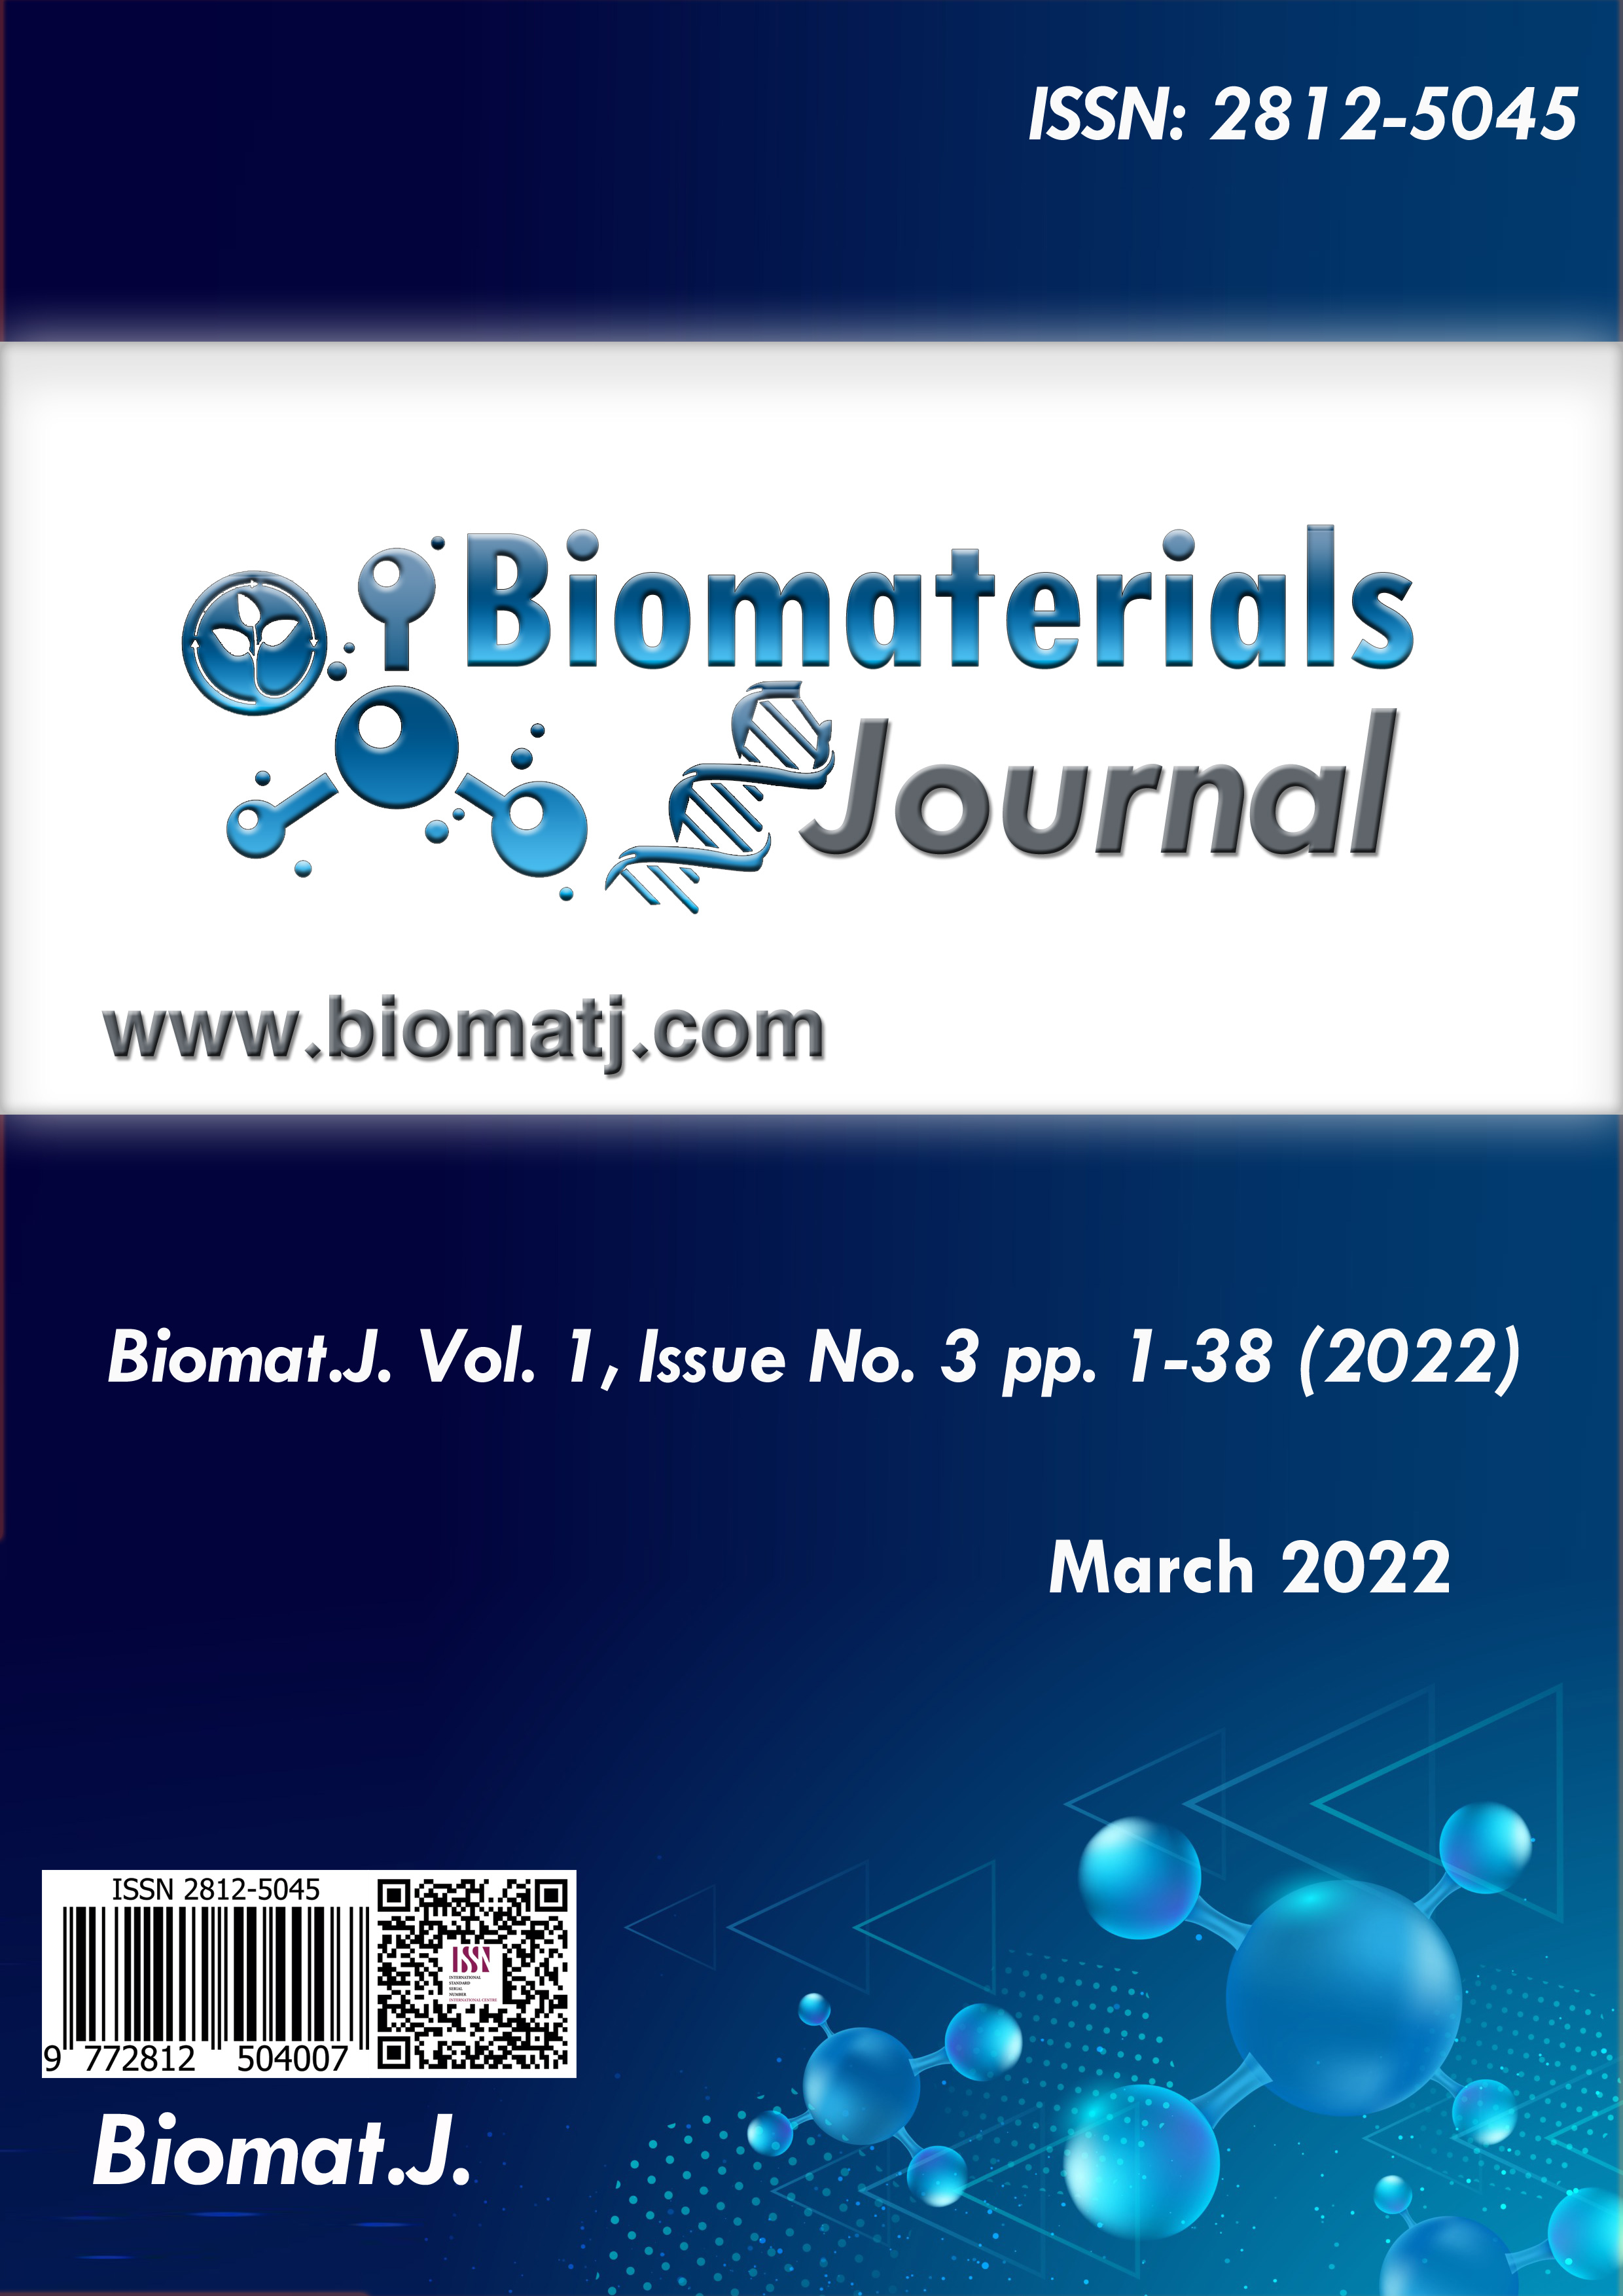 Biomaterials Journal Volume 1, Issue No. 3, March 2022